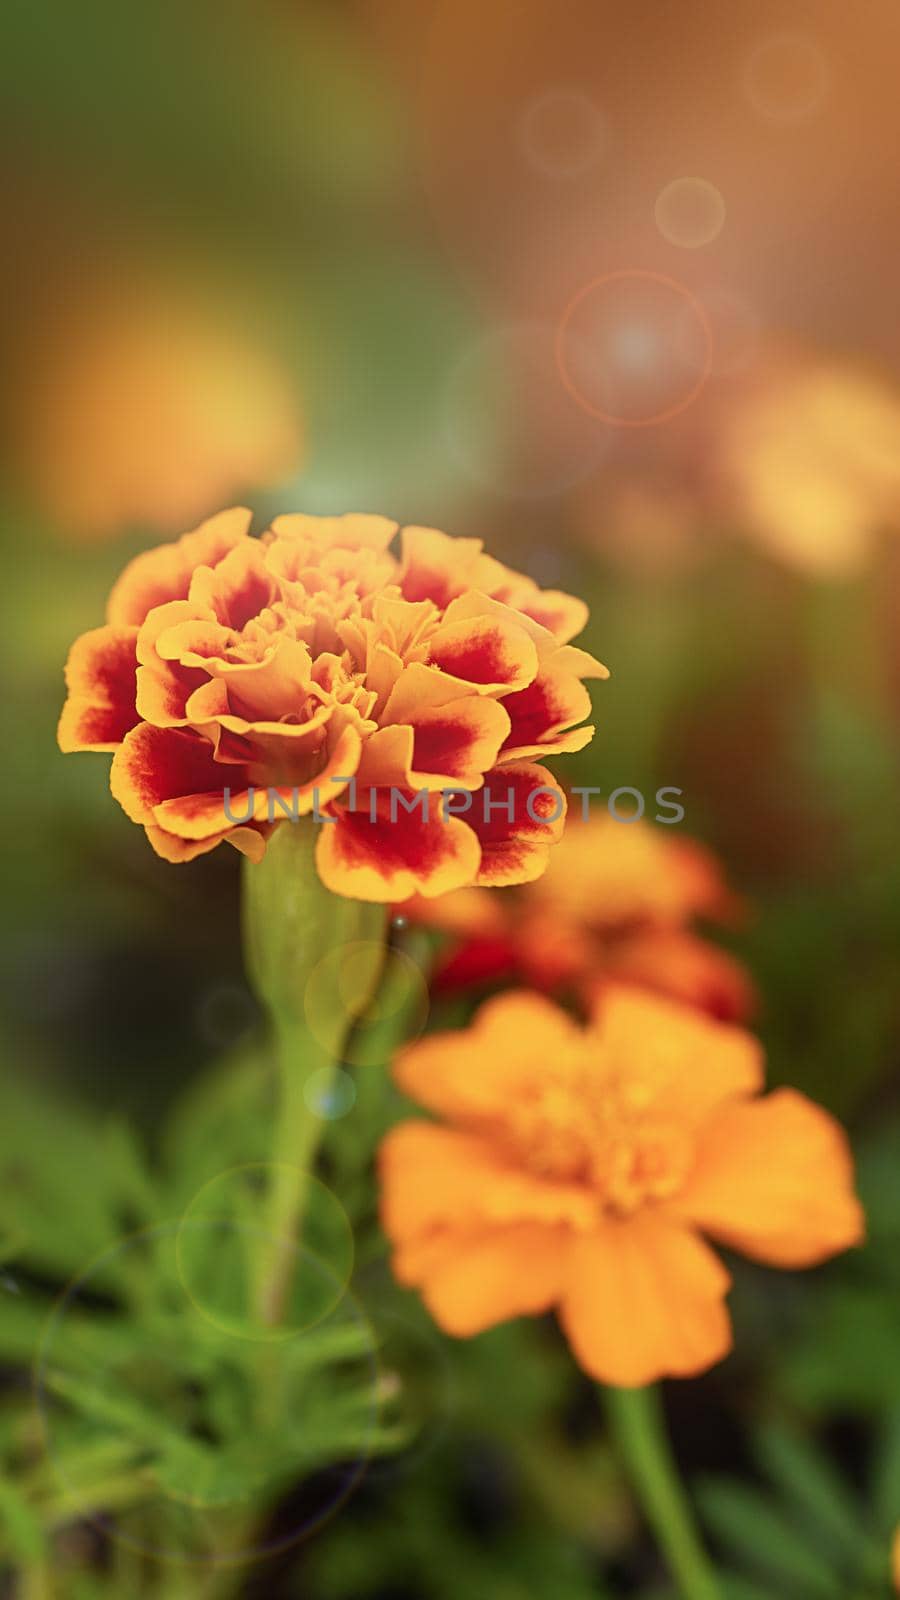 Orange marigold flower close-up on a blurred background with bokeh, kanakambar by Ramanouskaya